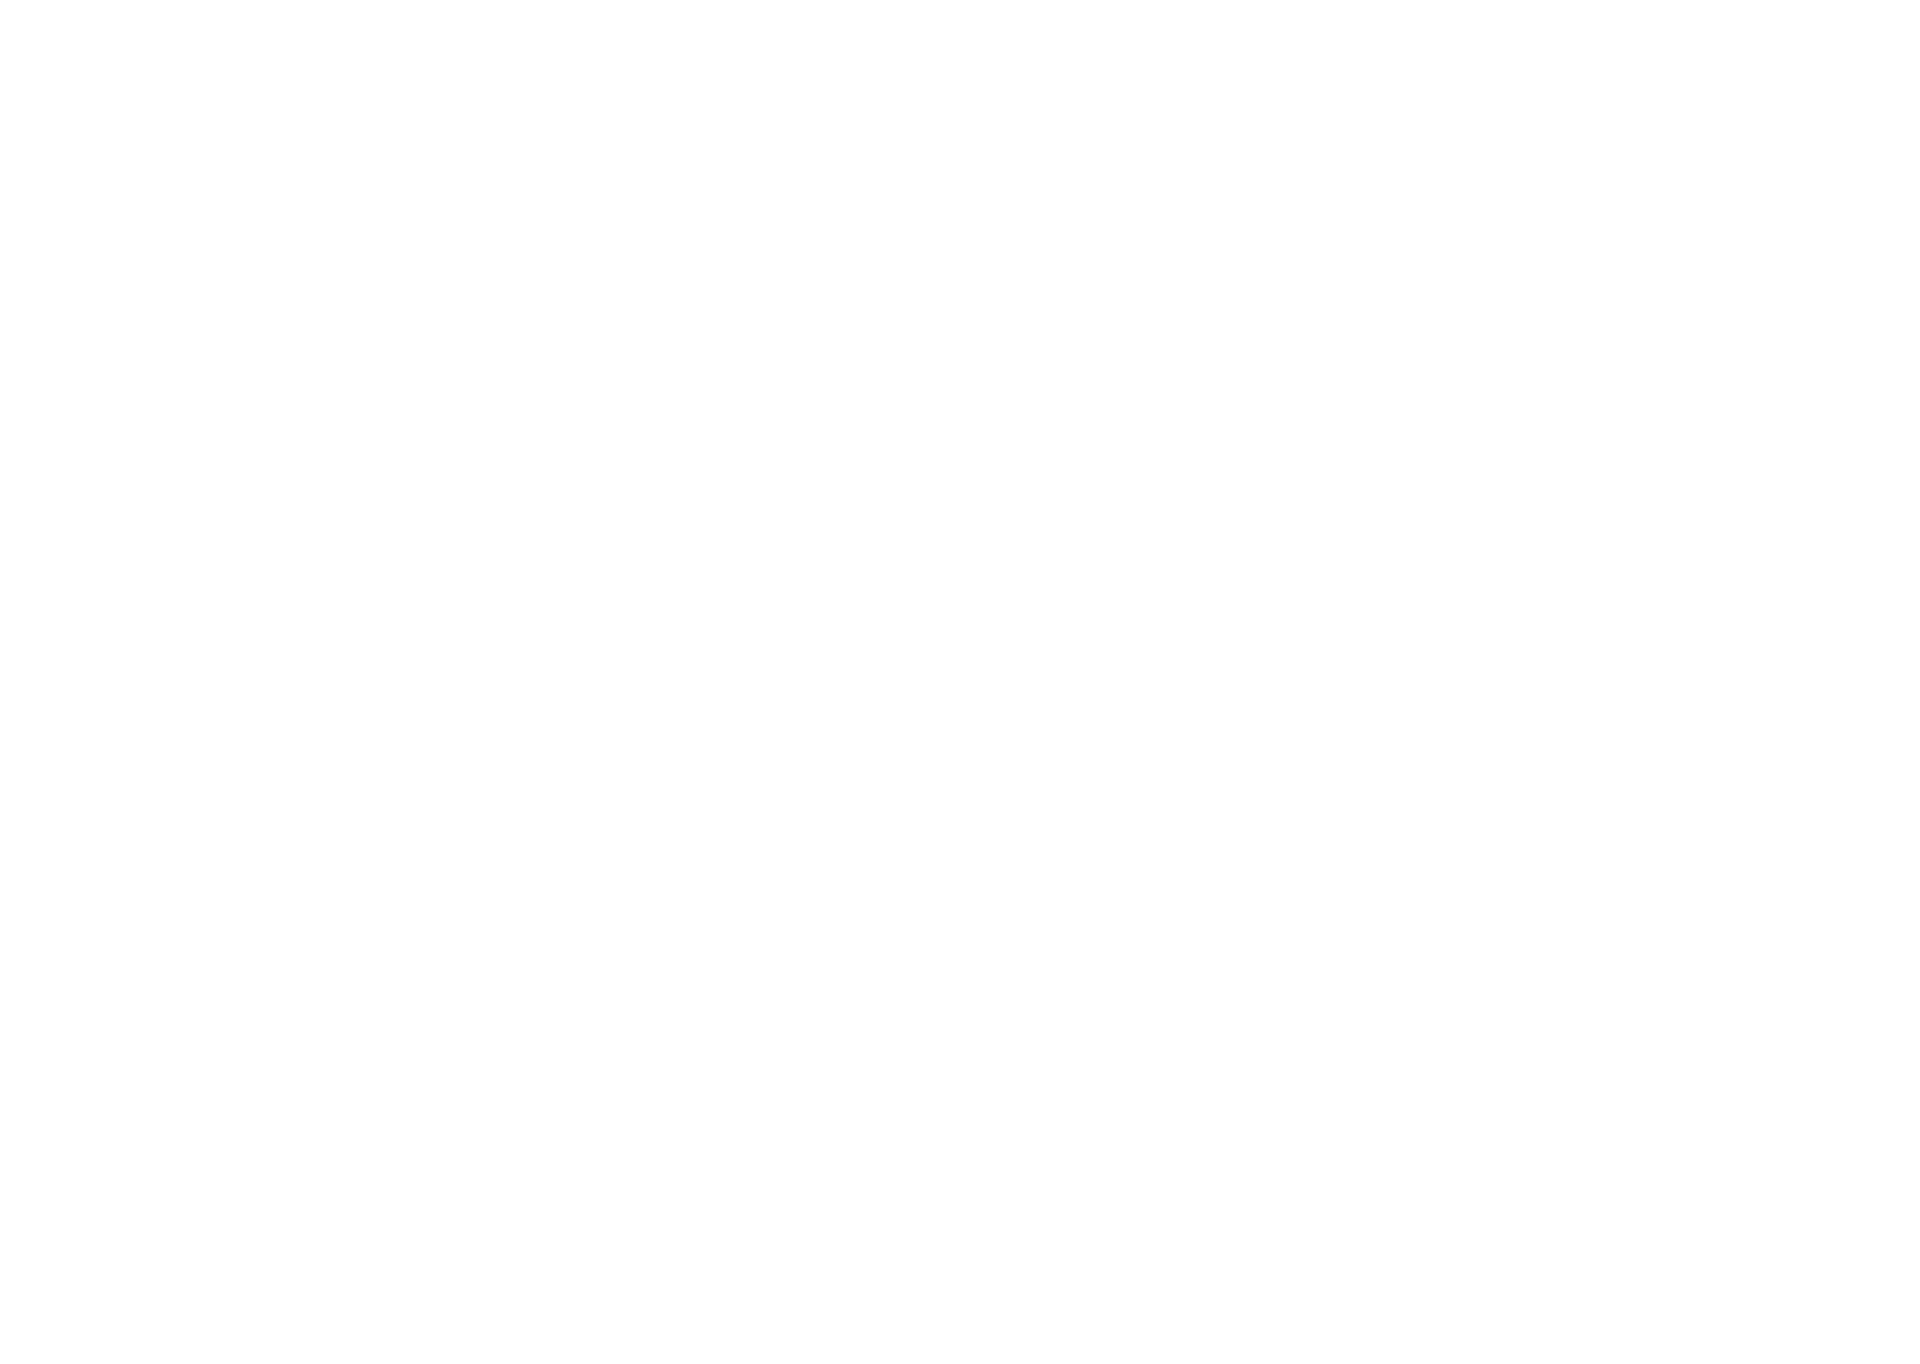 Freeman's Endowed C.E Junior Academy